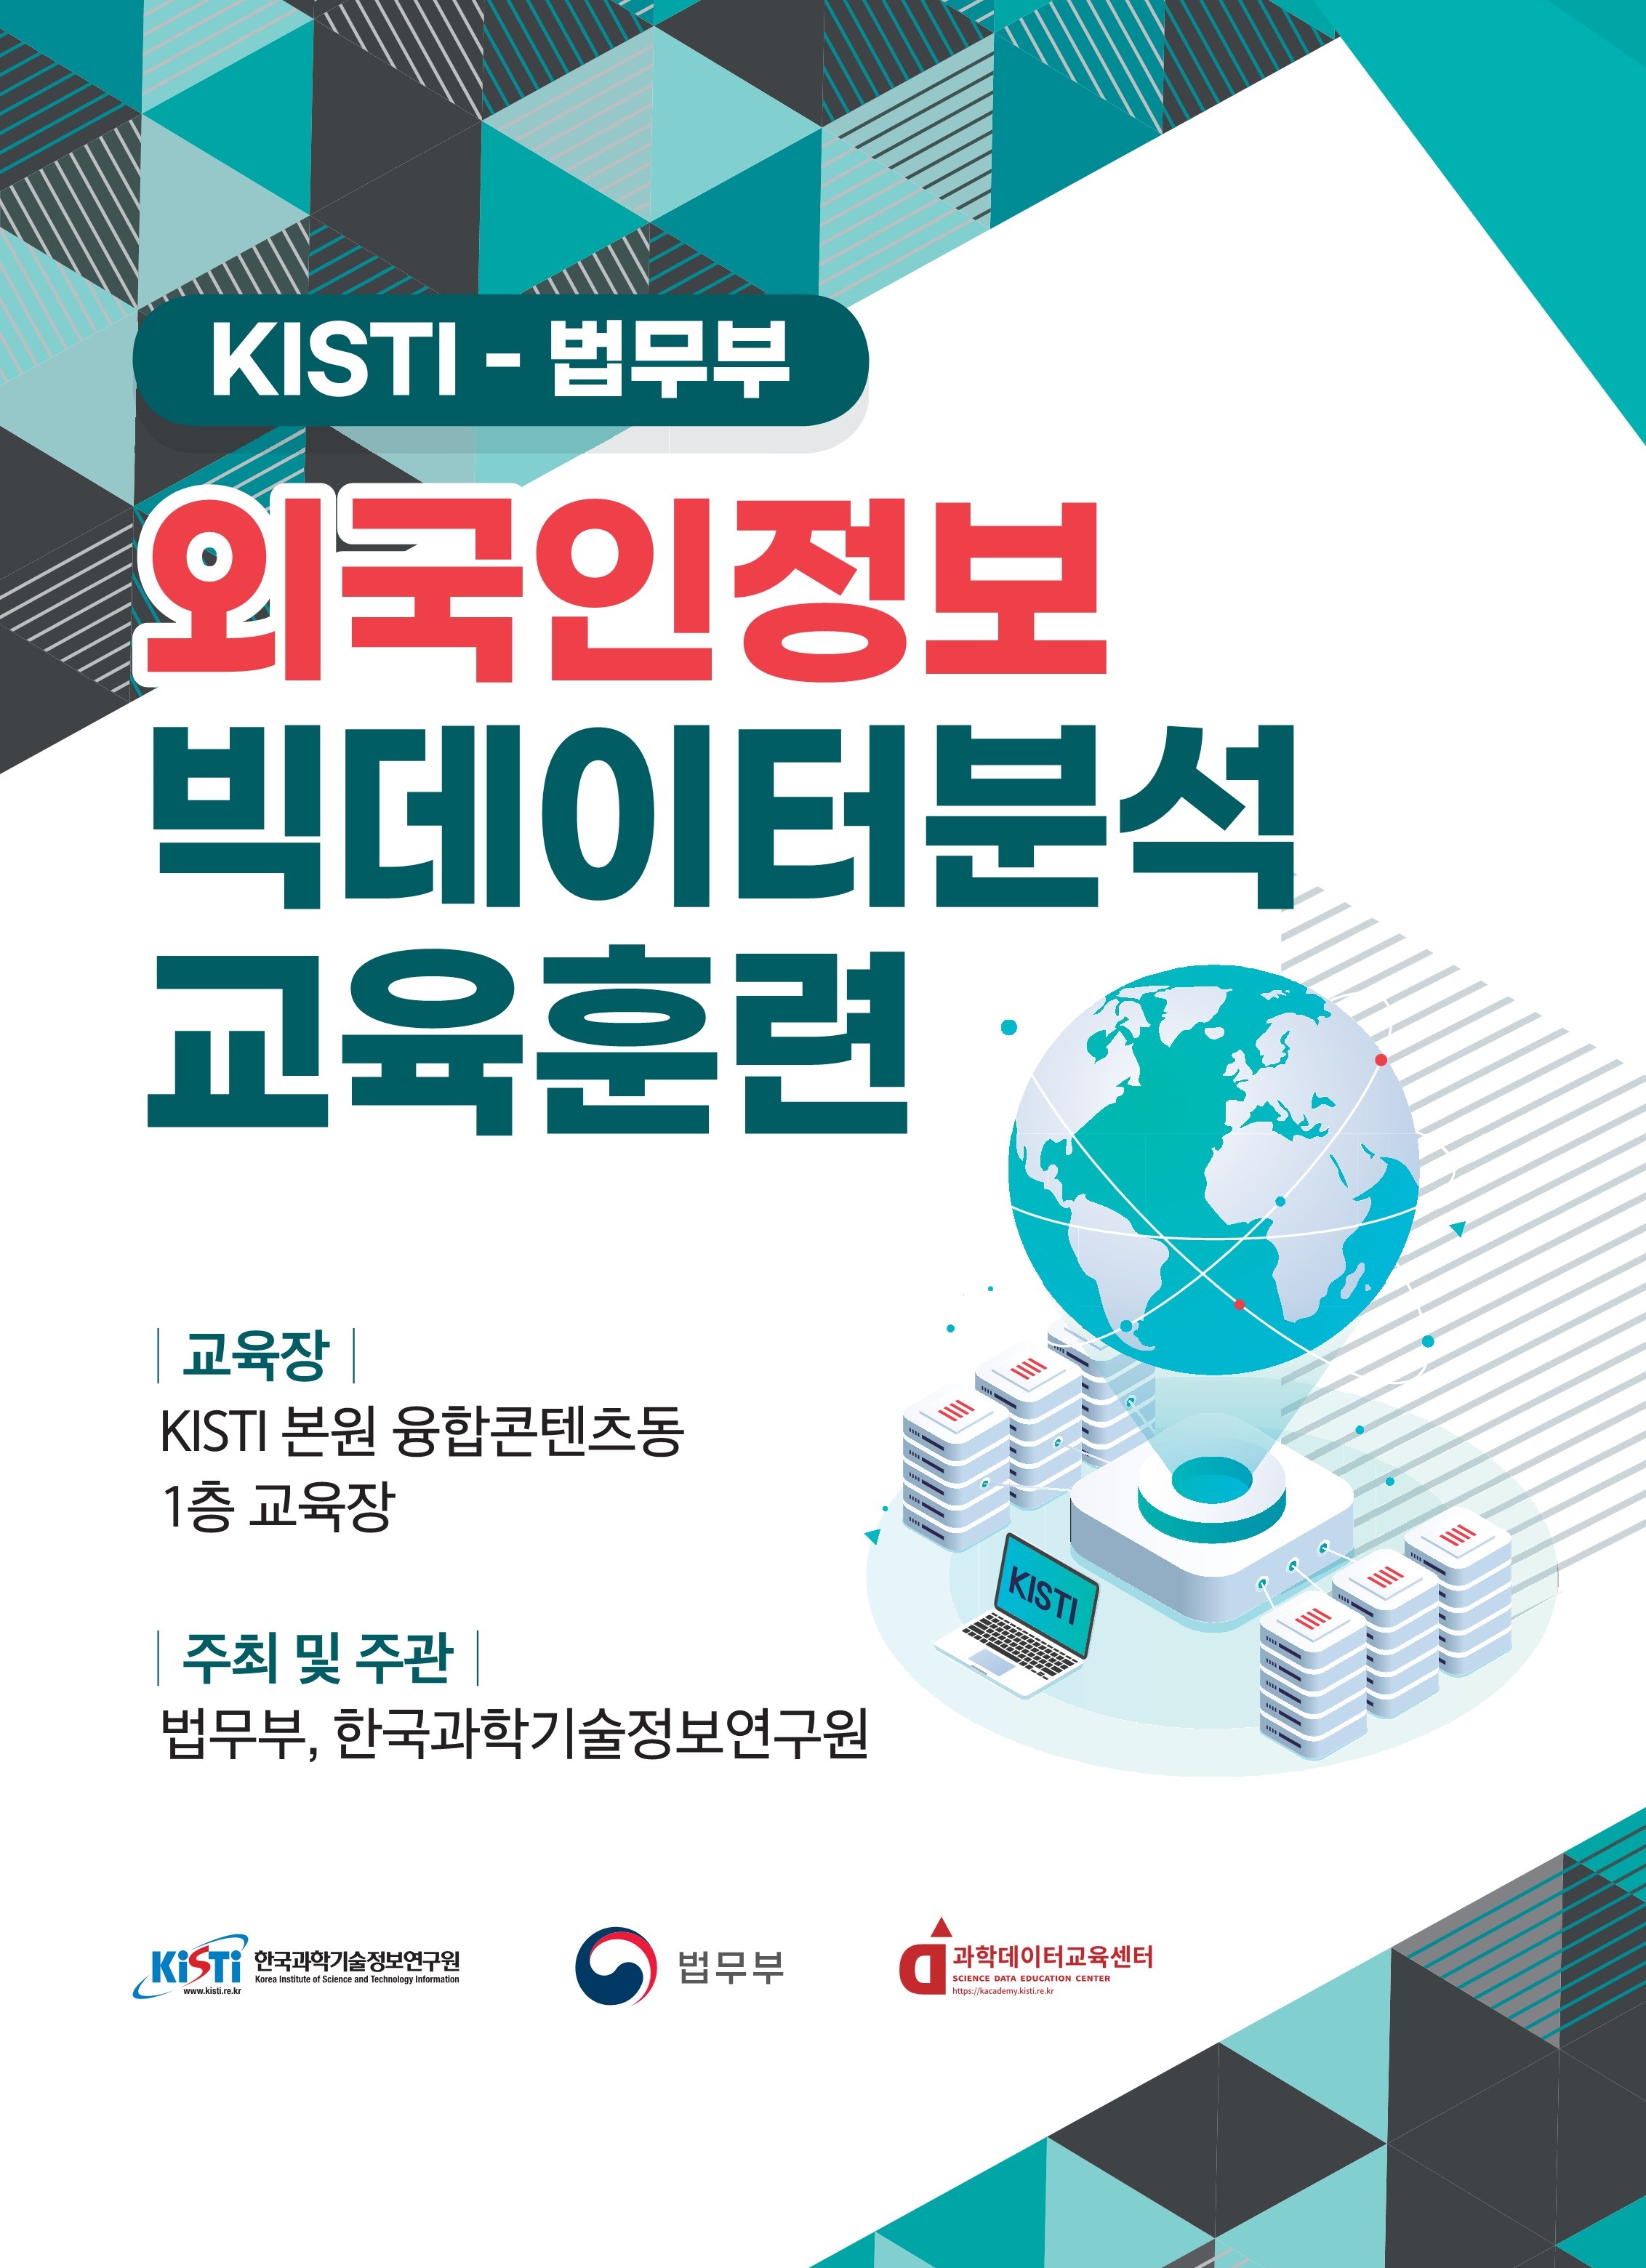 KISTI-법무부/외국인정보 빅데이터 분석 교육훈련 / 교육장 : KISTI 본원 융합콘텐츠동 1층 교육장 / 주최 및 주관 : 법무부, 한국과학기술정보연구